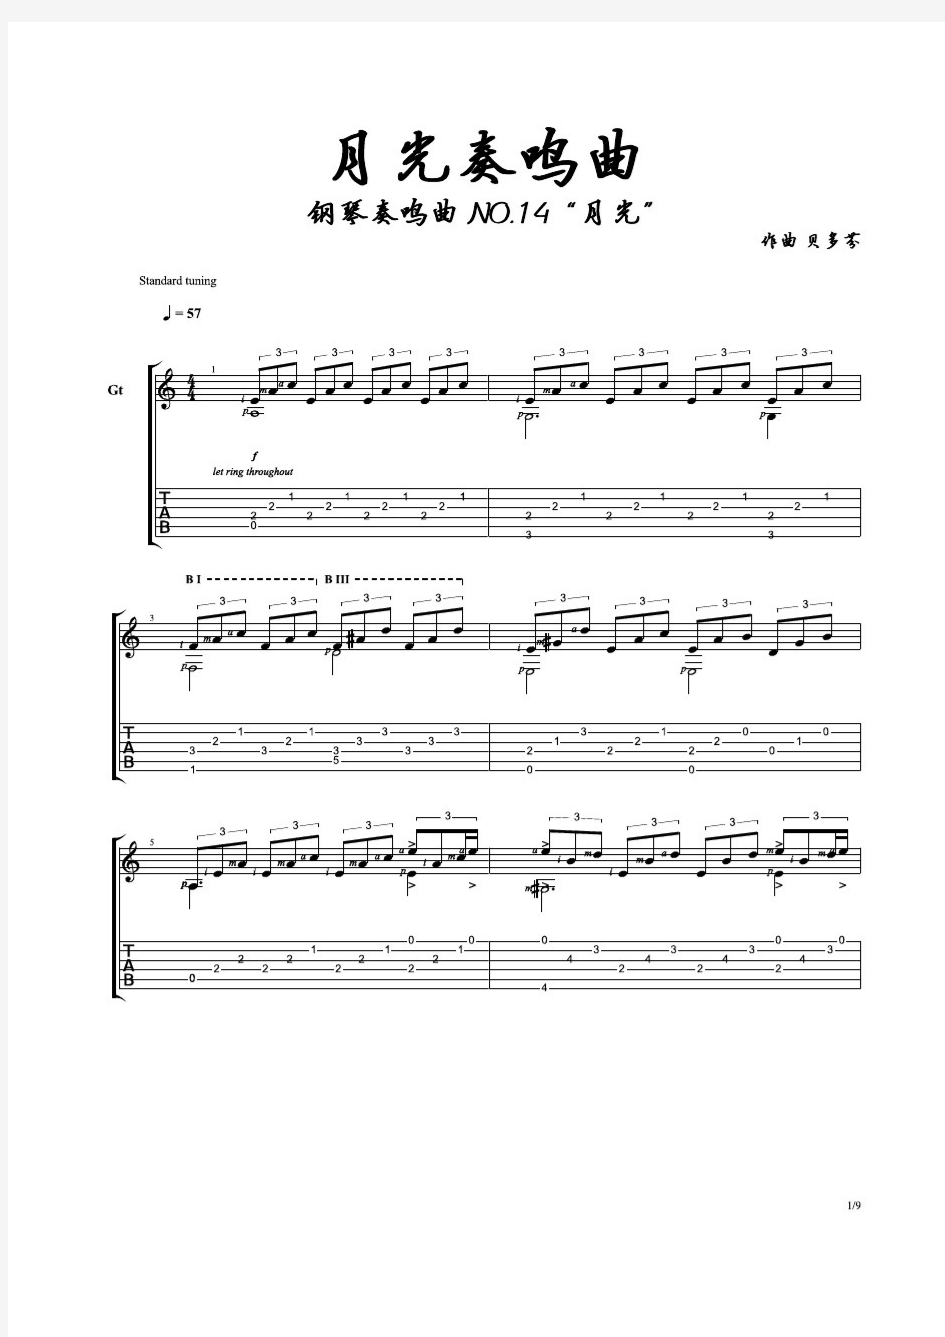 [Classic] Beethoven - Moonlight Sonata